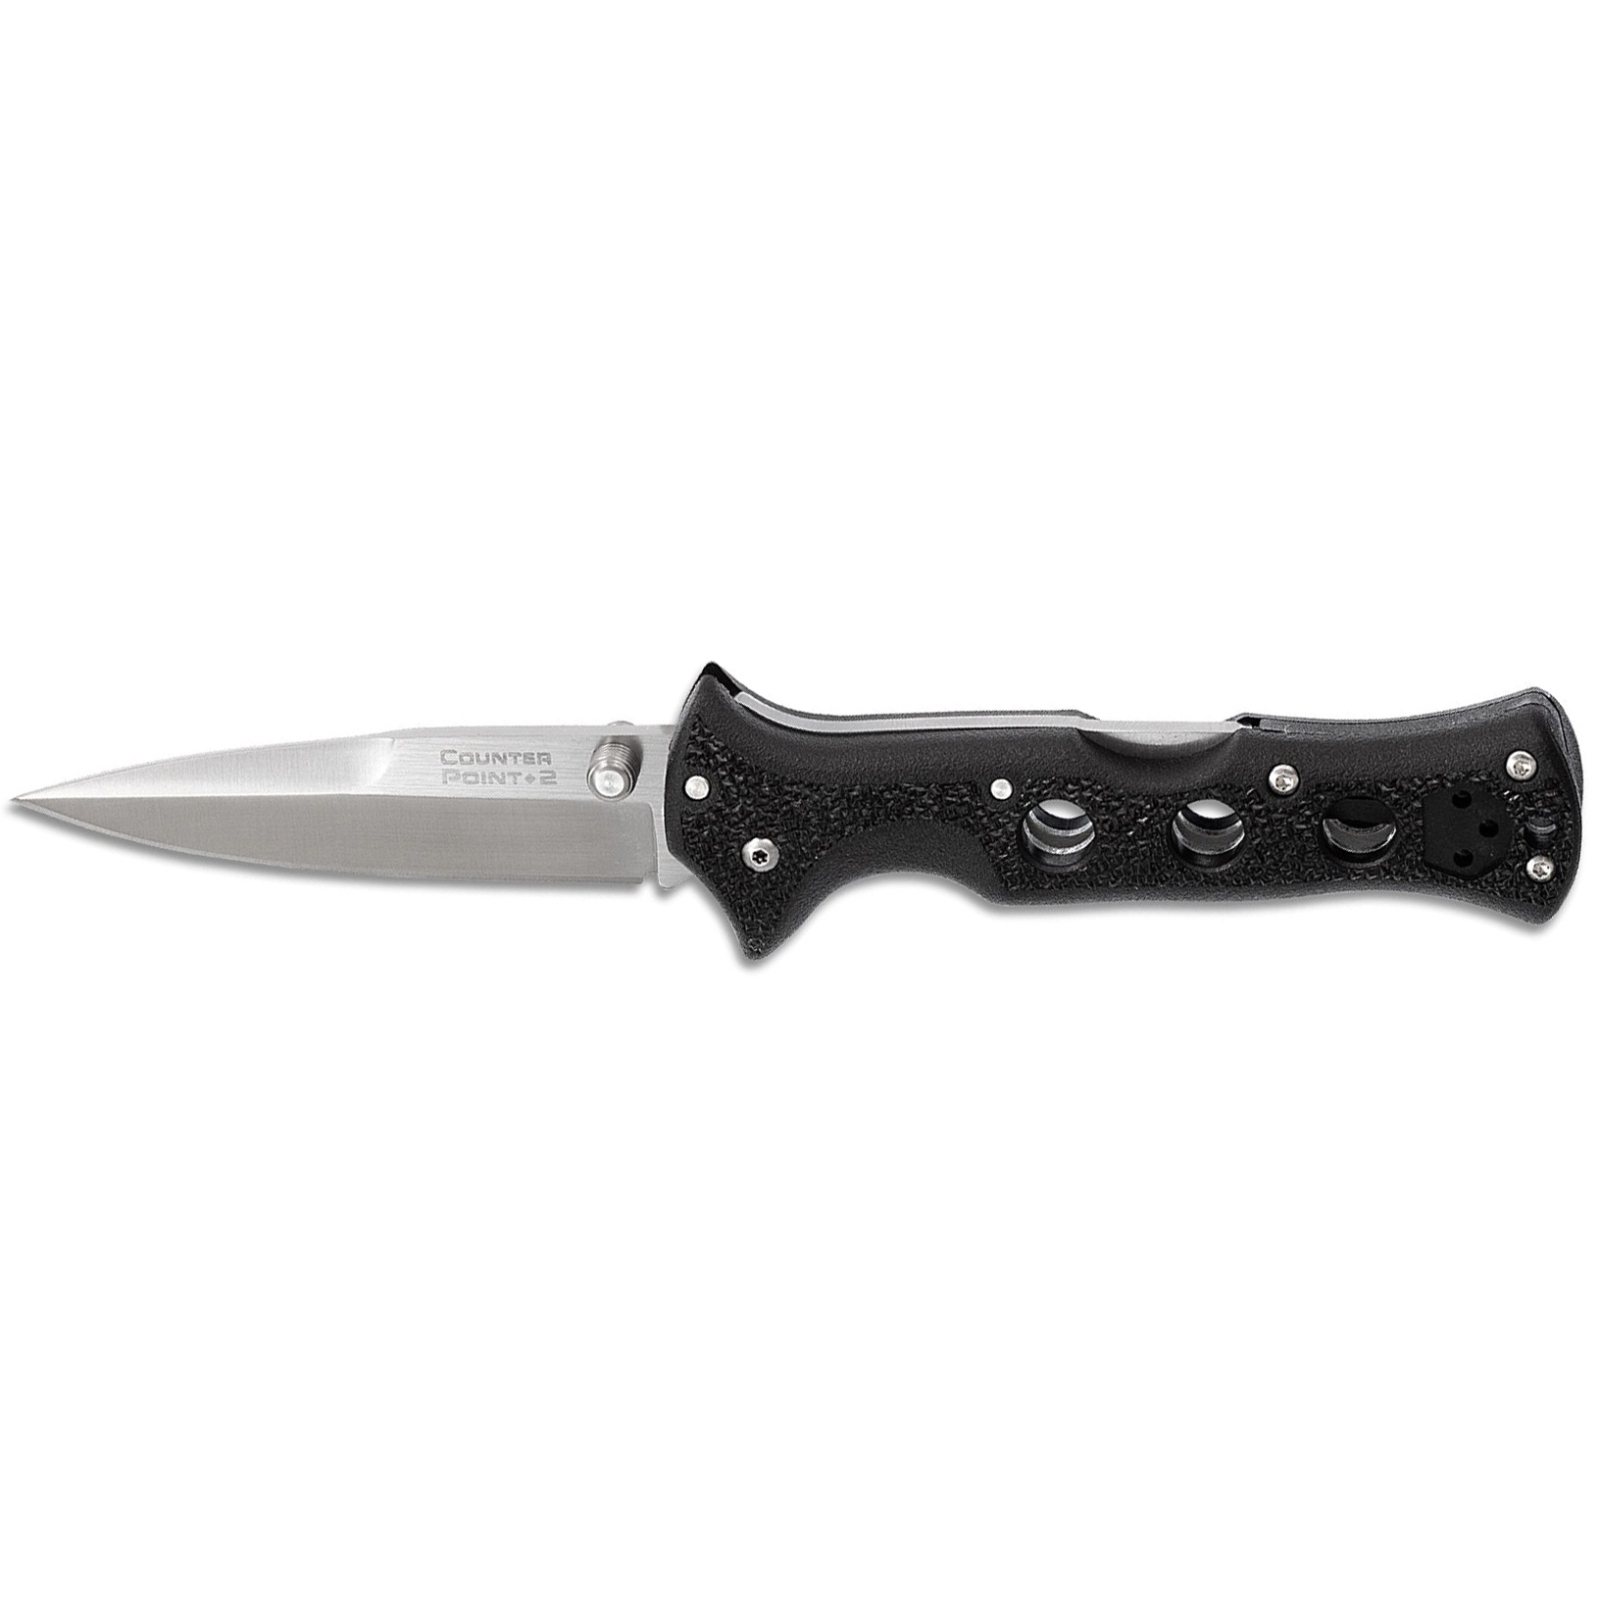 Нож Cold Steel Counter Point II AUS-8A (CS-10AC)